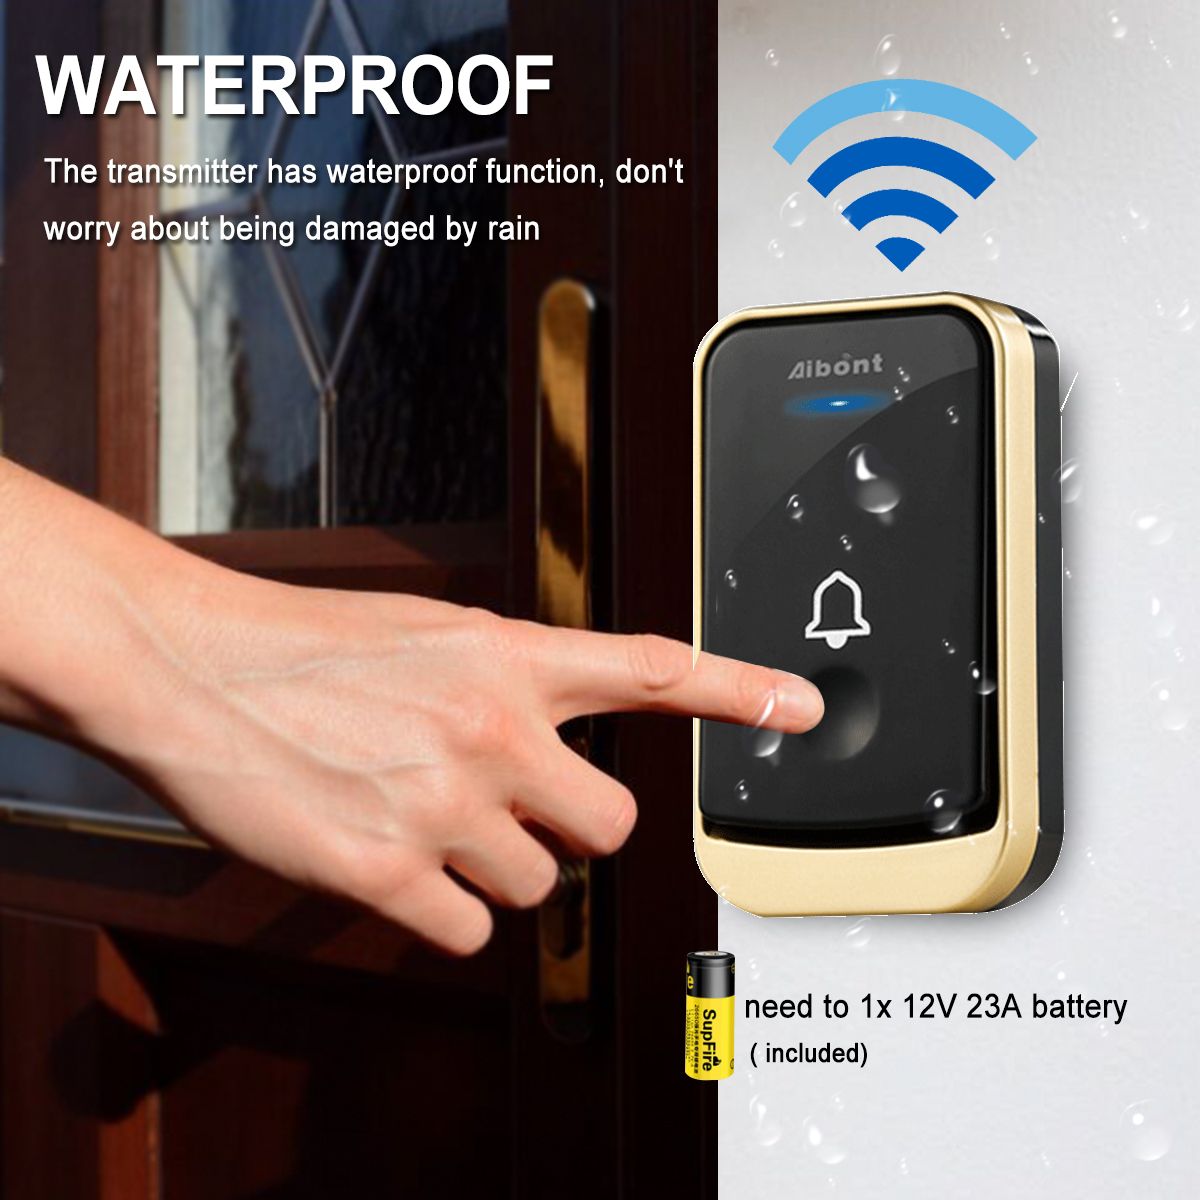 Smart-Wireless-Doorbell-45-Songs-Ringtones--200m-Transmission-Music-DoorBell-1724299